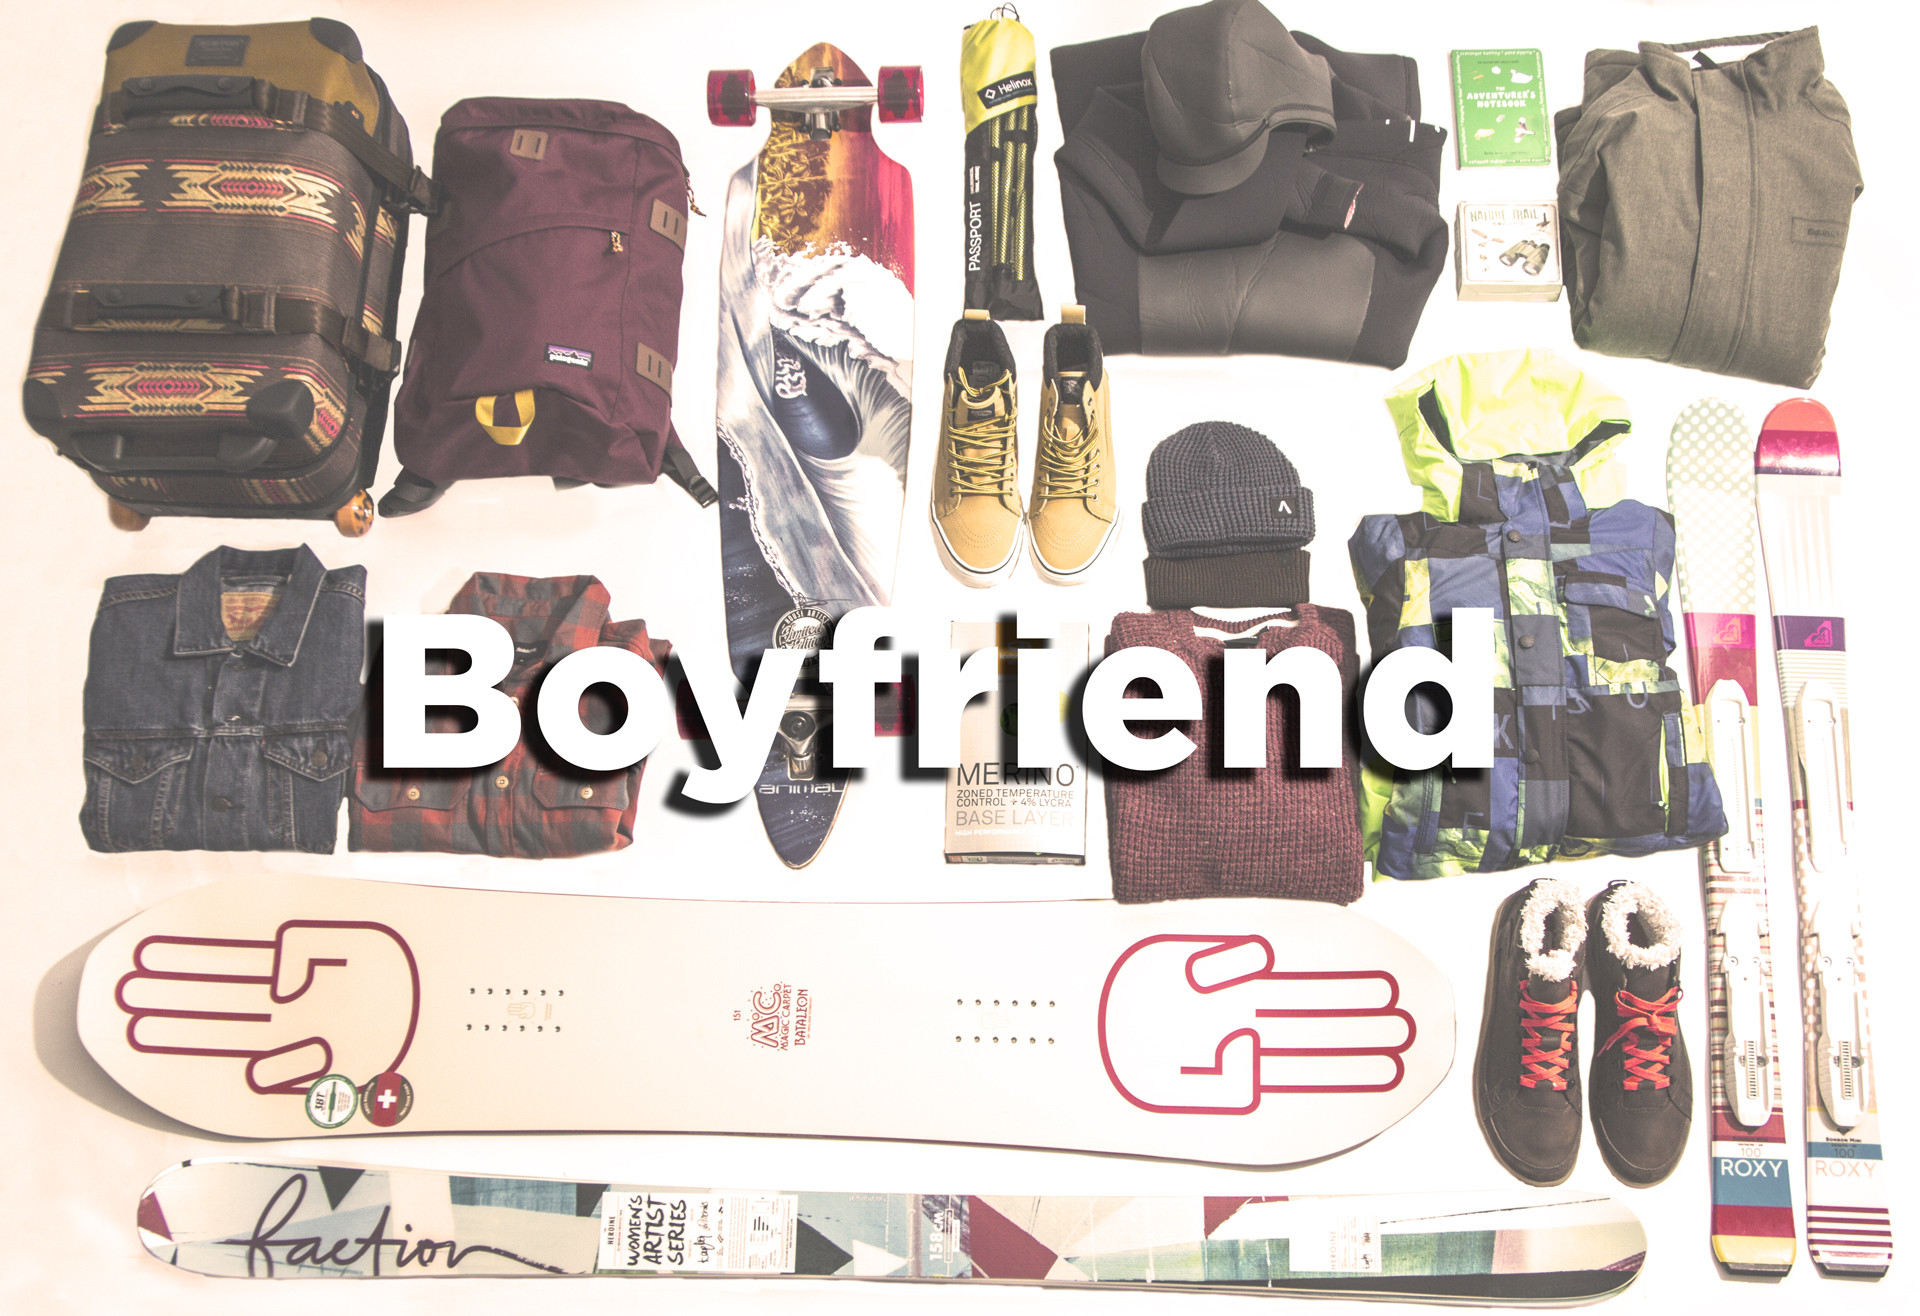 Holiday Gift Ideas For Boyfriend
 Christmas Gift Ideas For A Boyfriend 15 Great Gifts